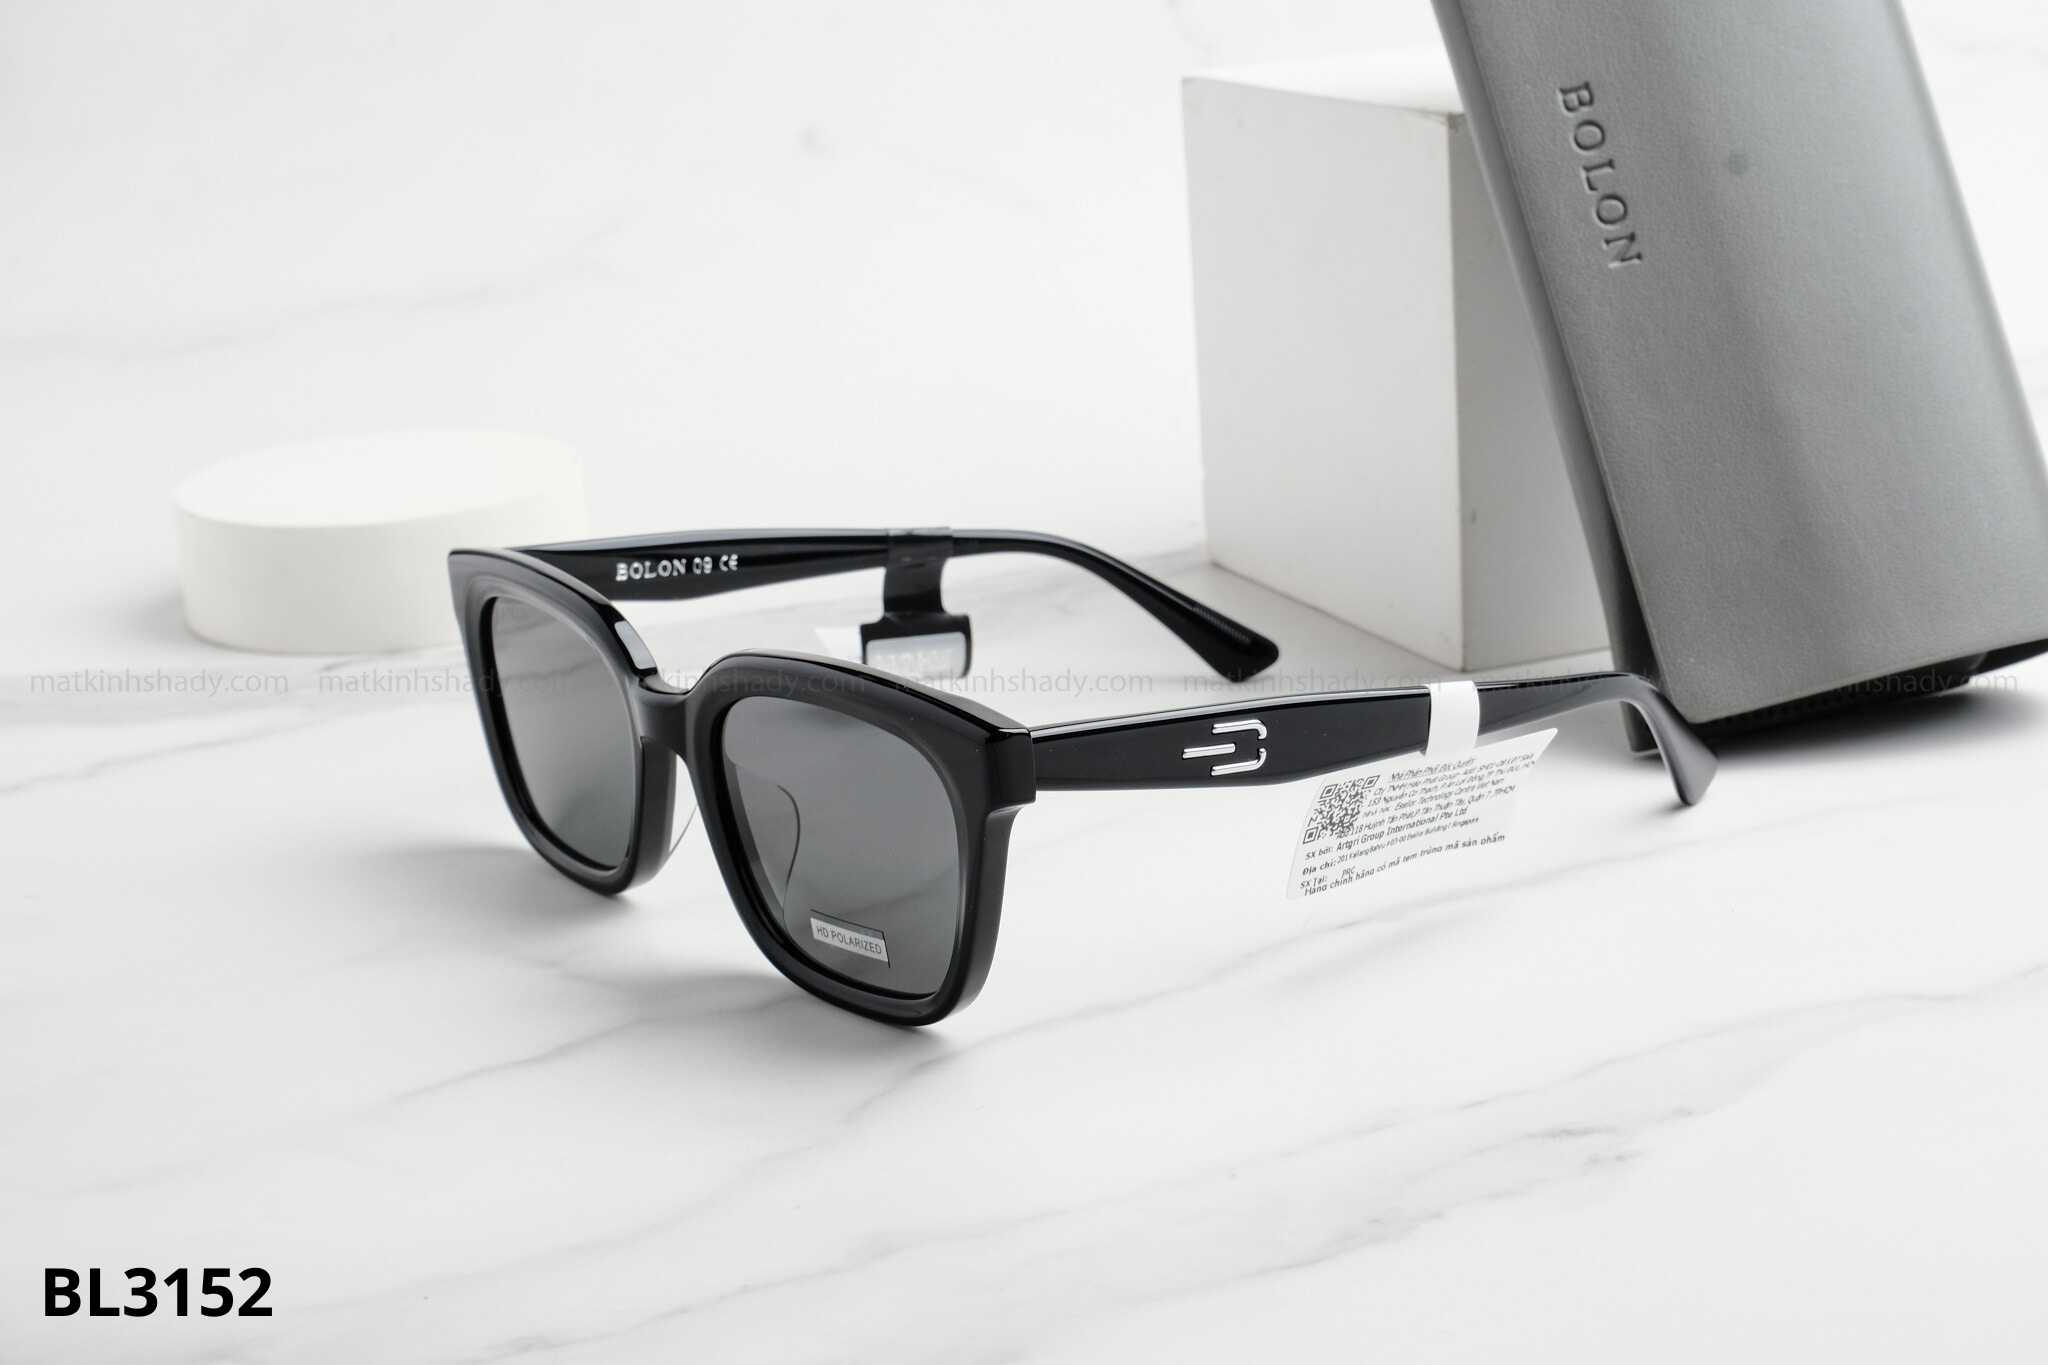  Bolon Eyewear - Sunglasses - BL3152 